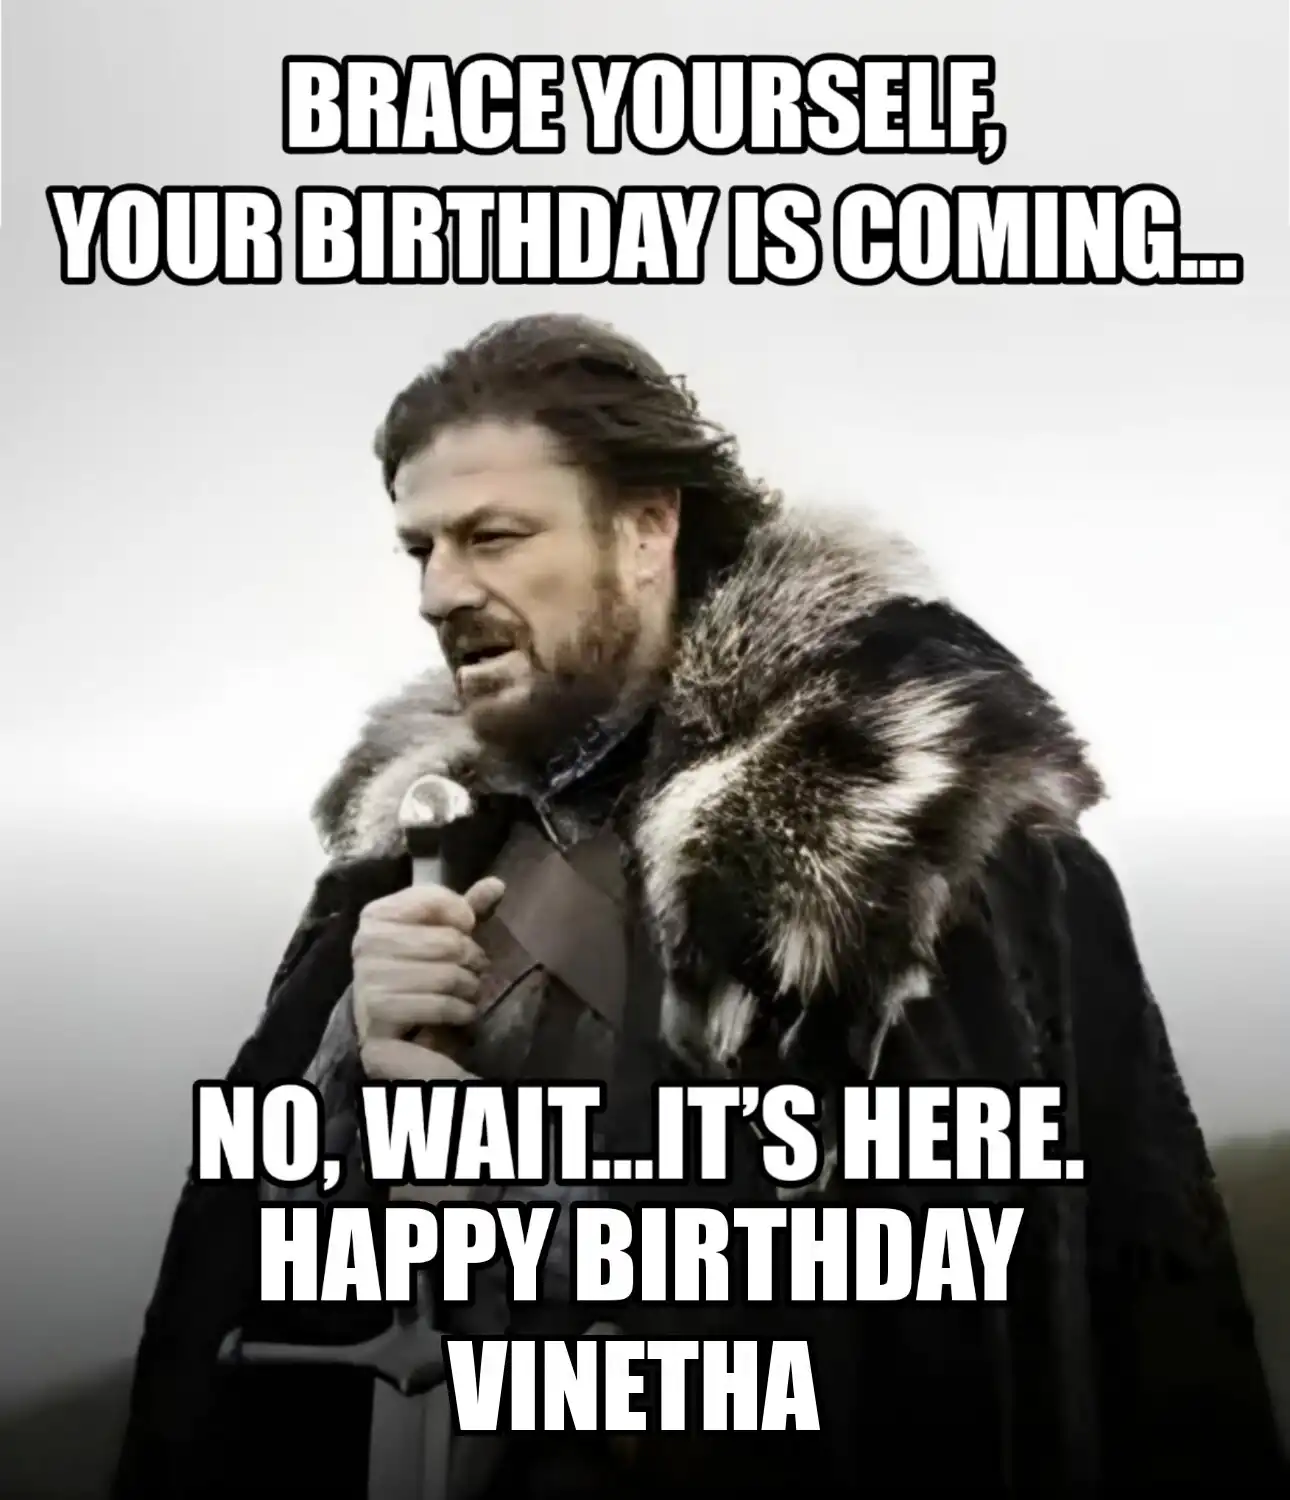 Happy Birthday Vinetha Brace Yourself Your Birthday Is Coming Meme